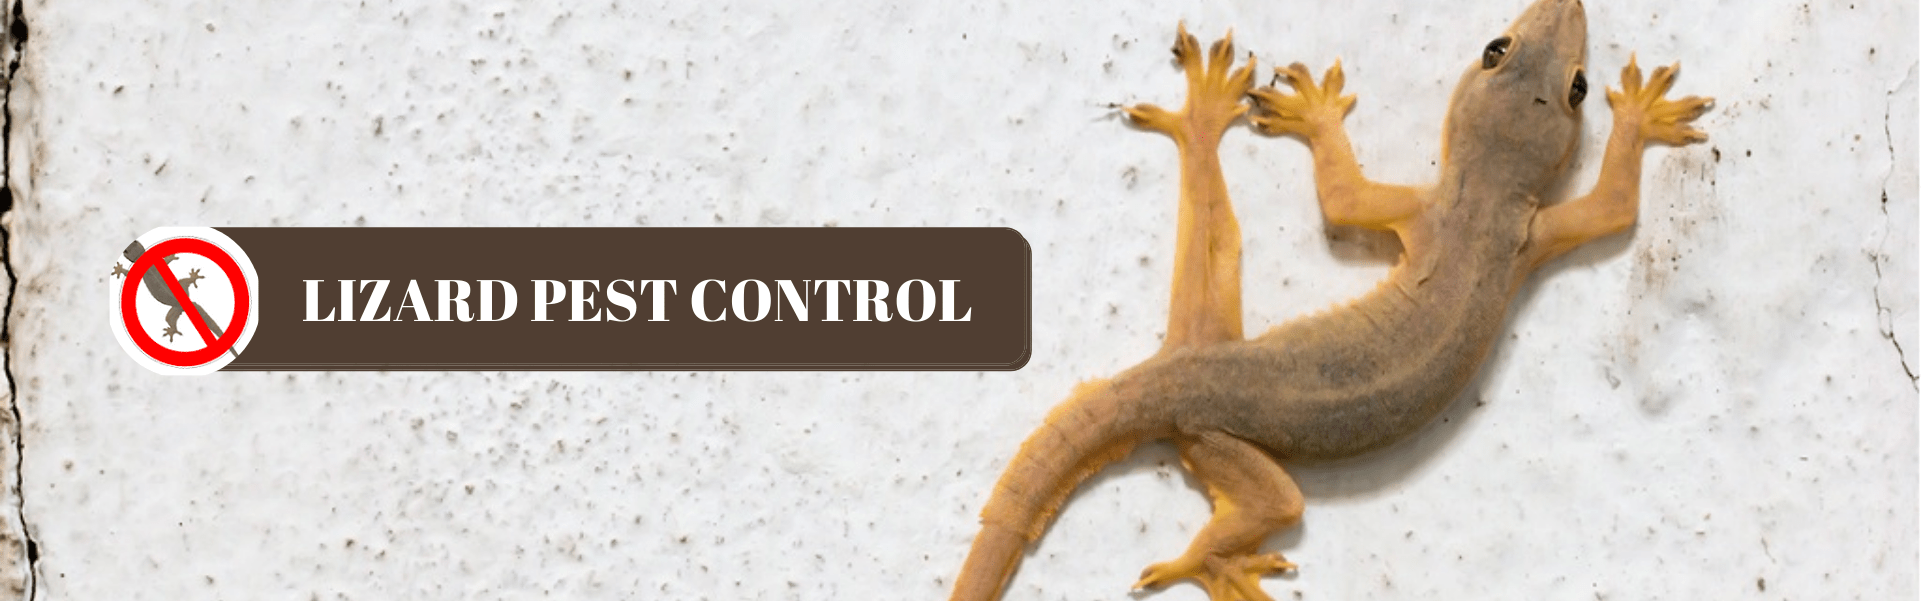 Lizard Control